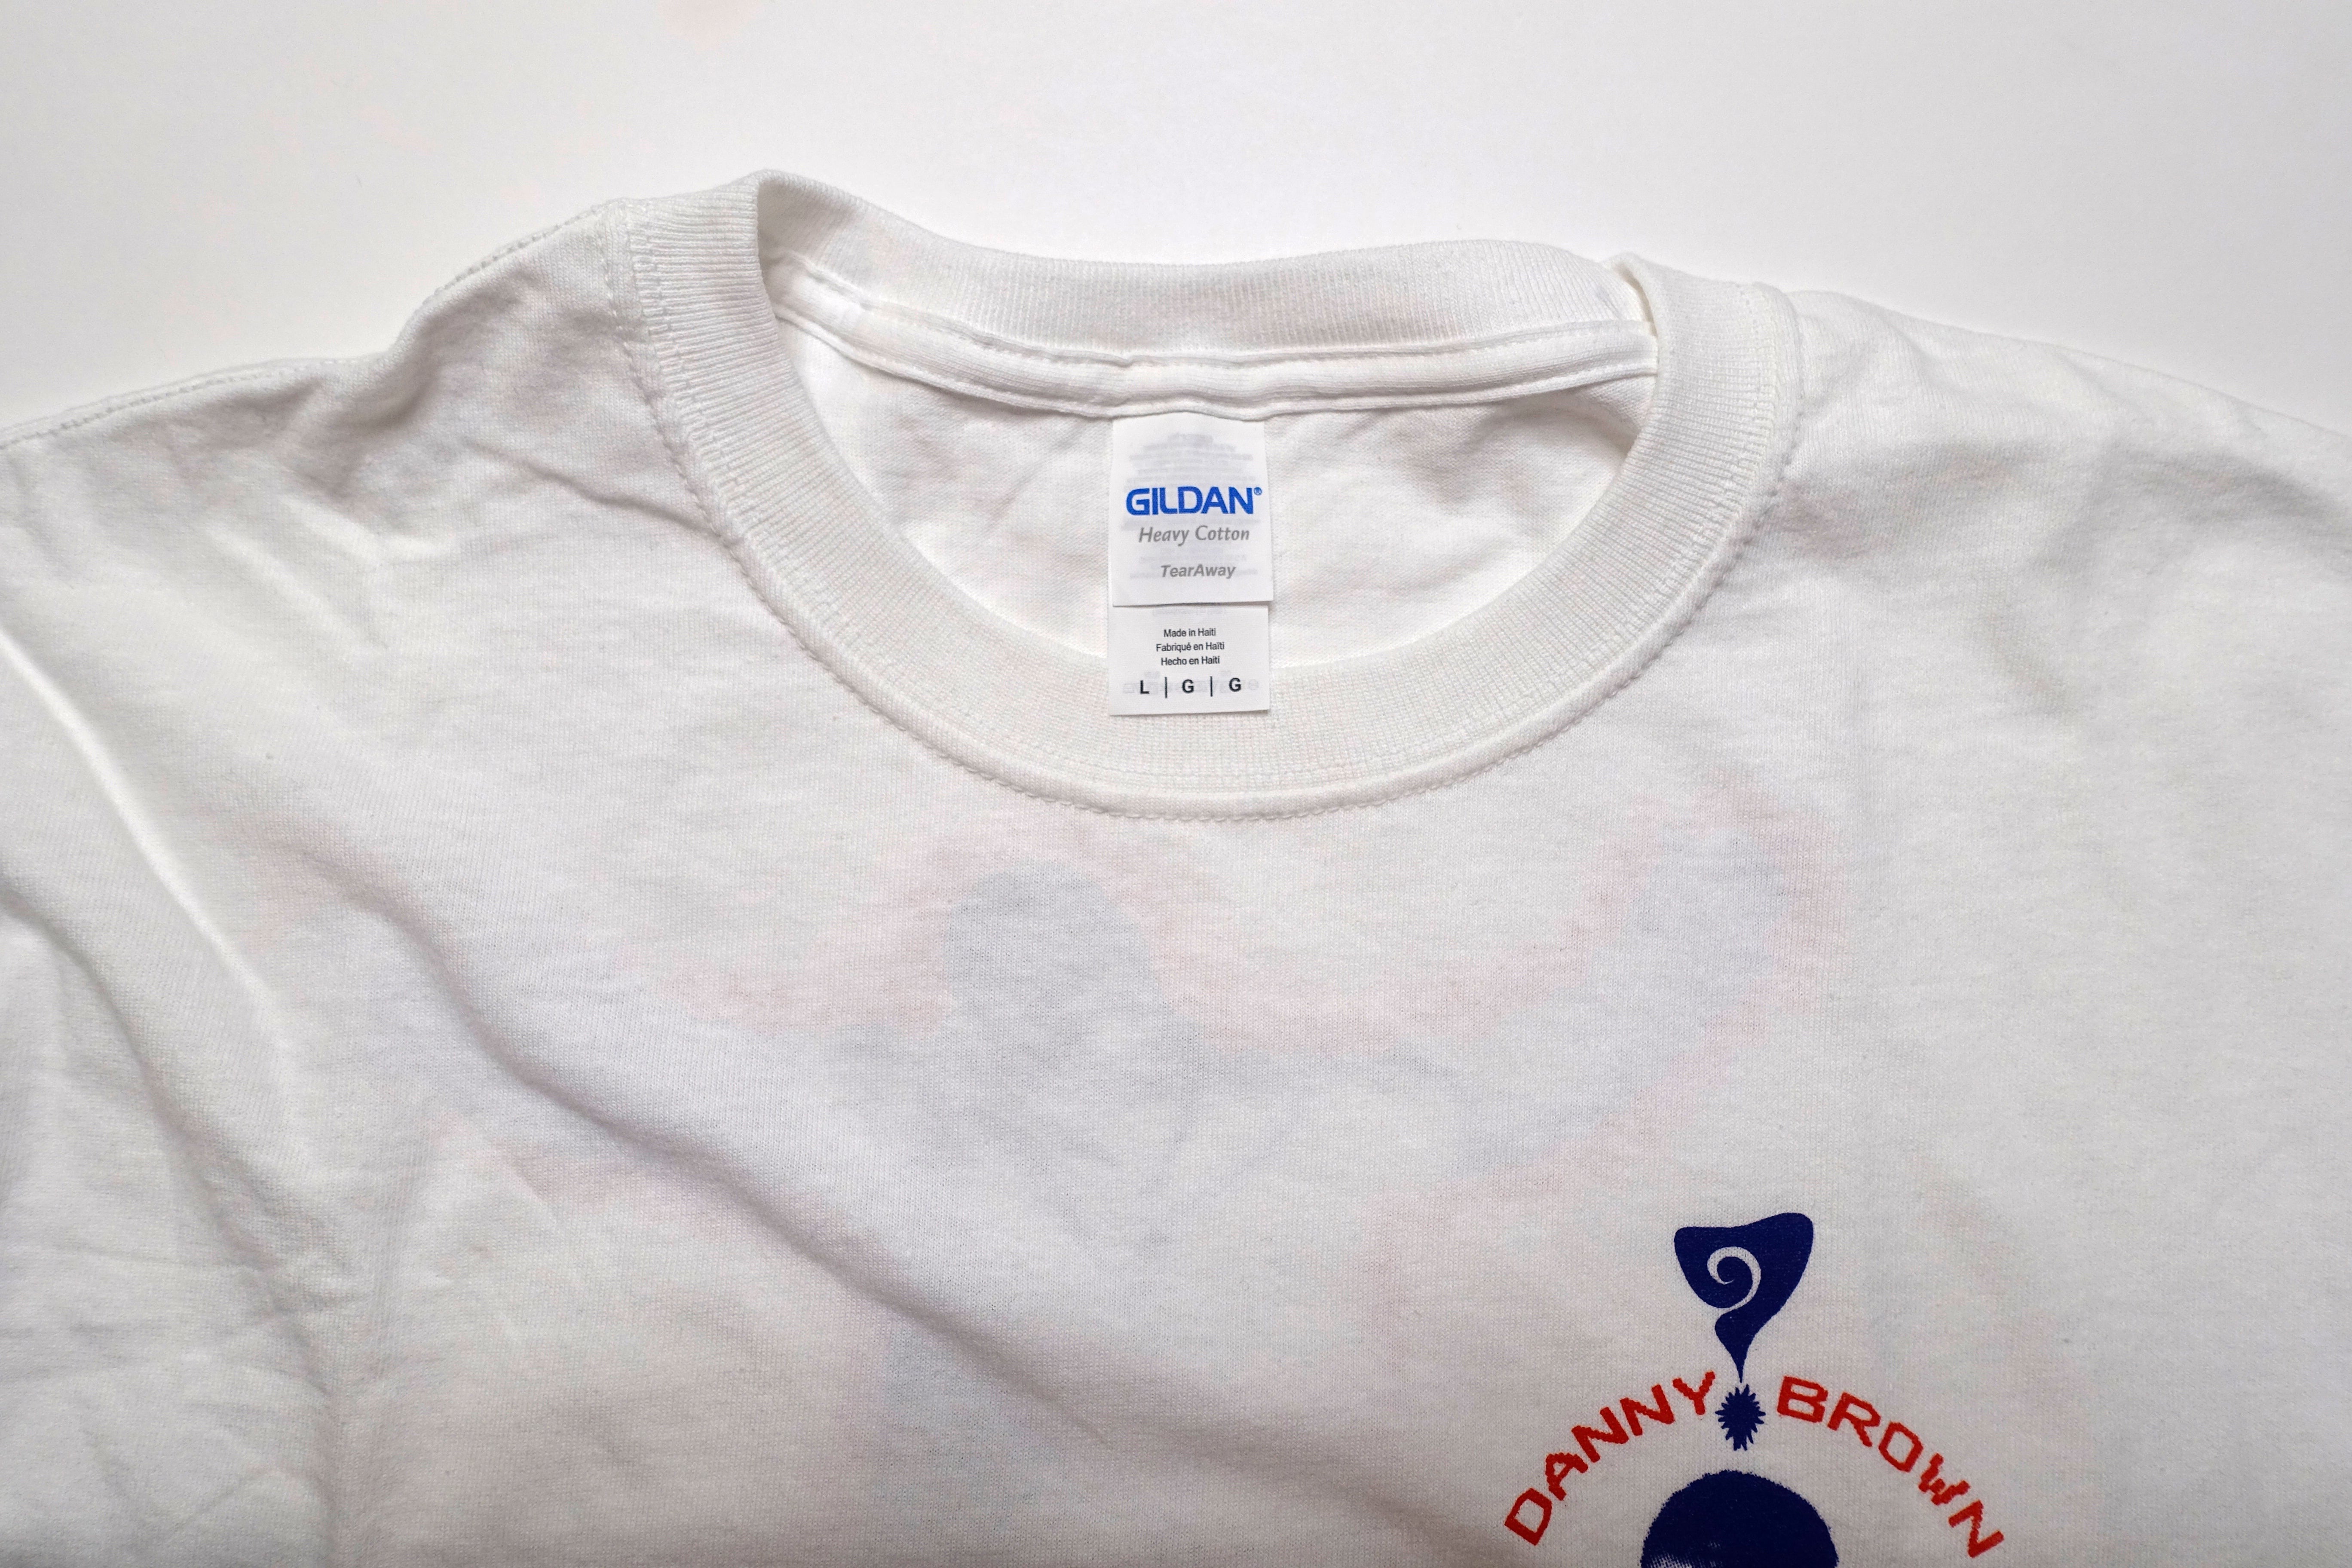 Danny Brown - uknowhatimsayin¿ 2019 Tour Shirt Size Large